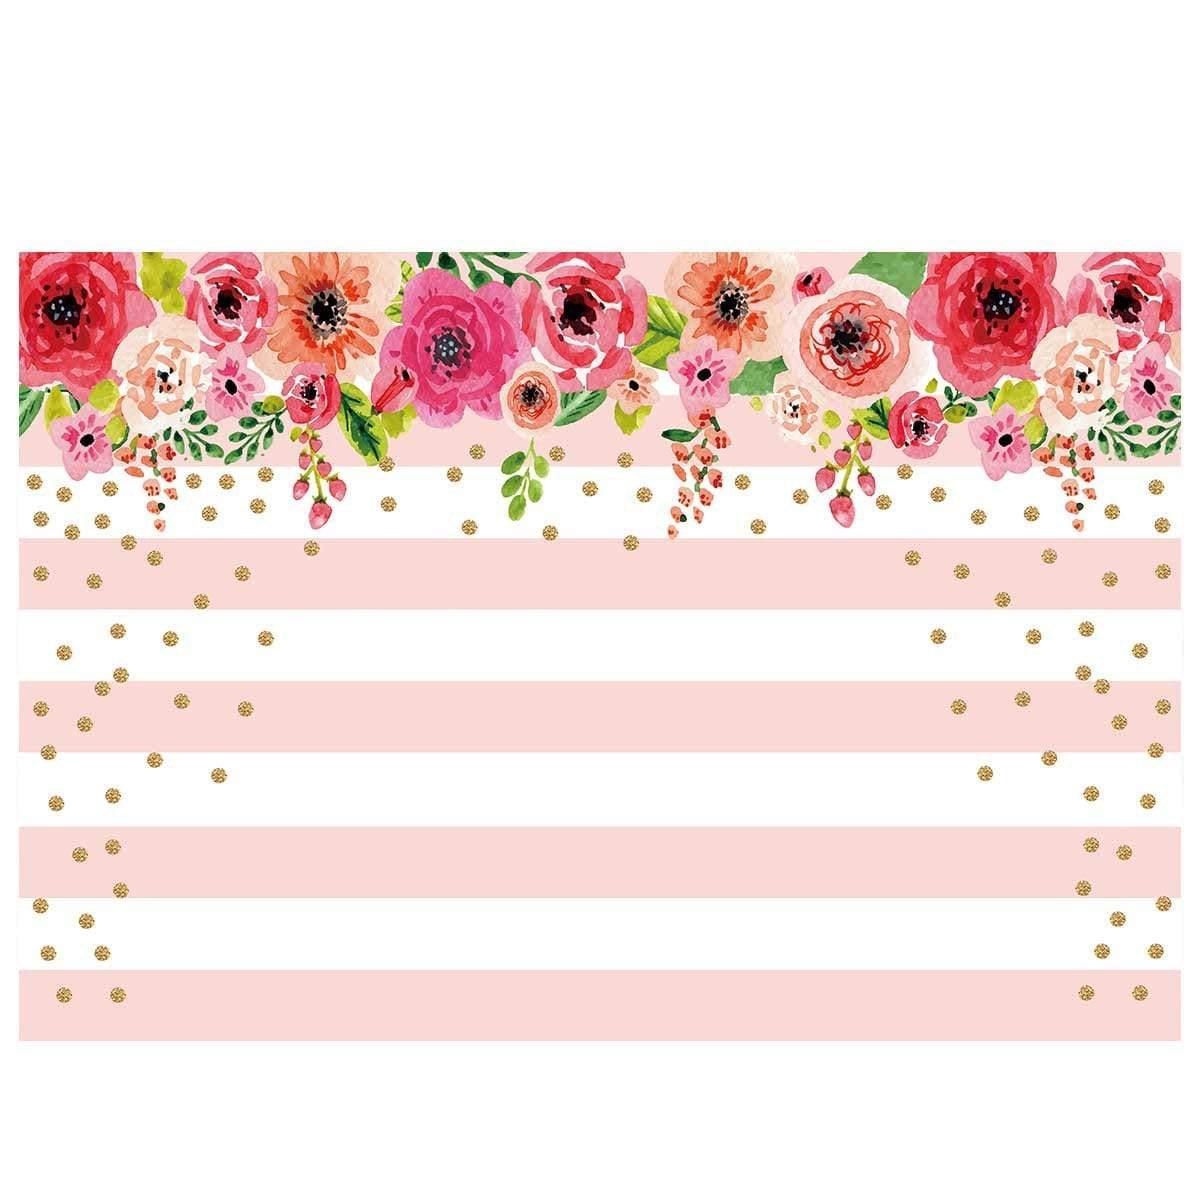 Allenjoy Pink and White Stripes Rose Floral Mother's Day Backdrop - Allenjoystudio